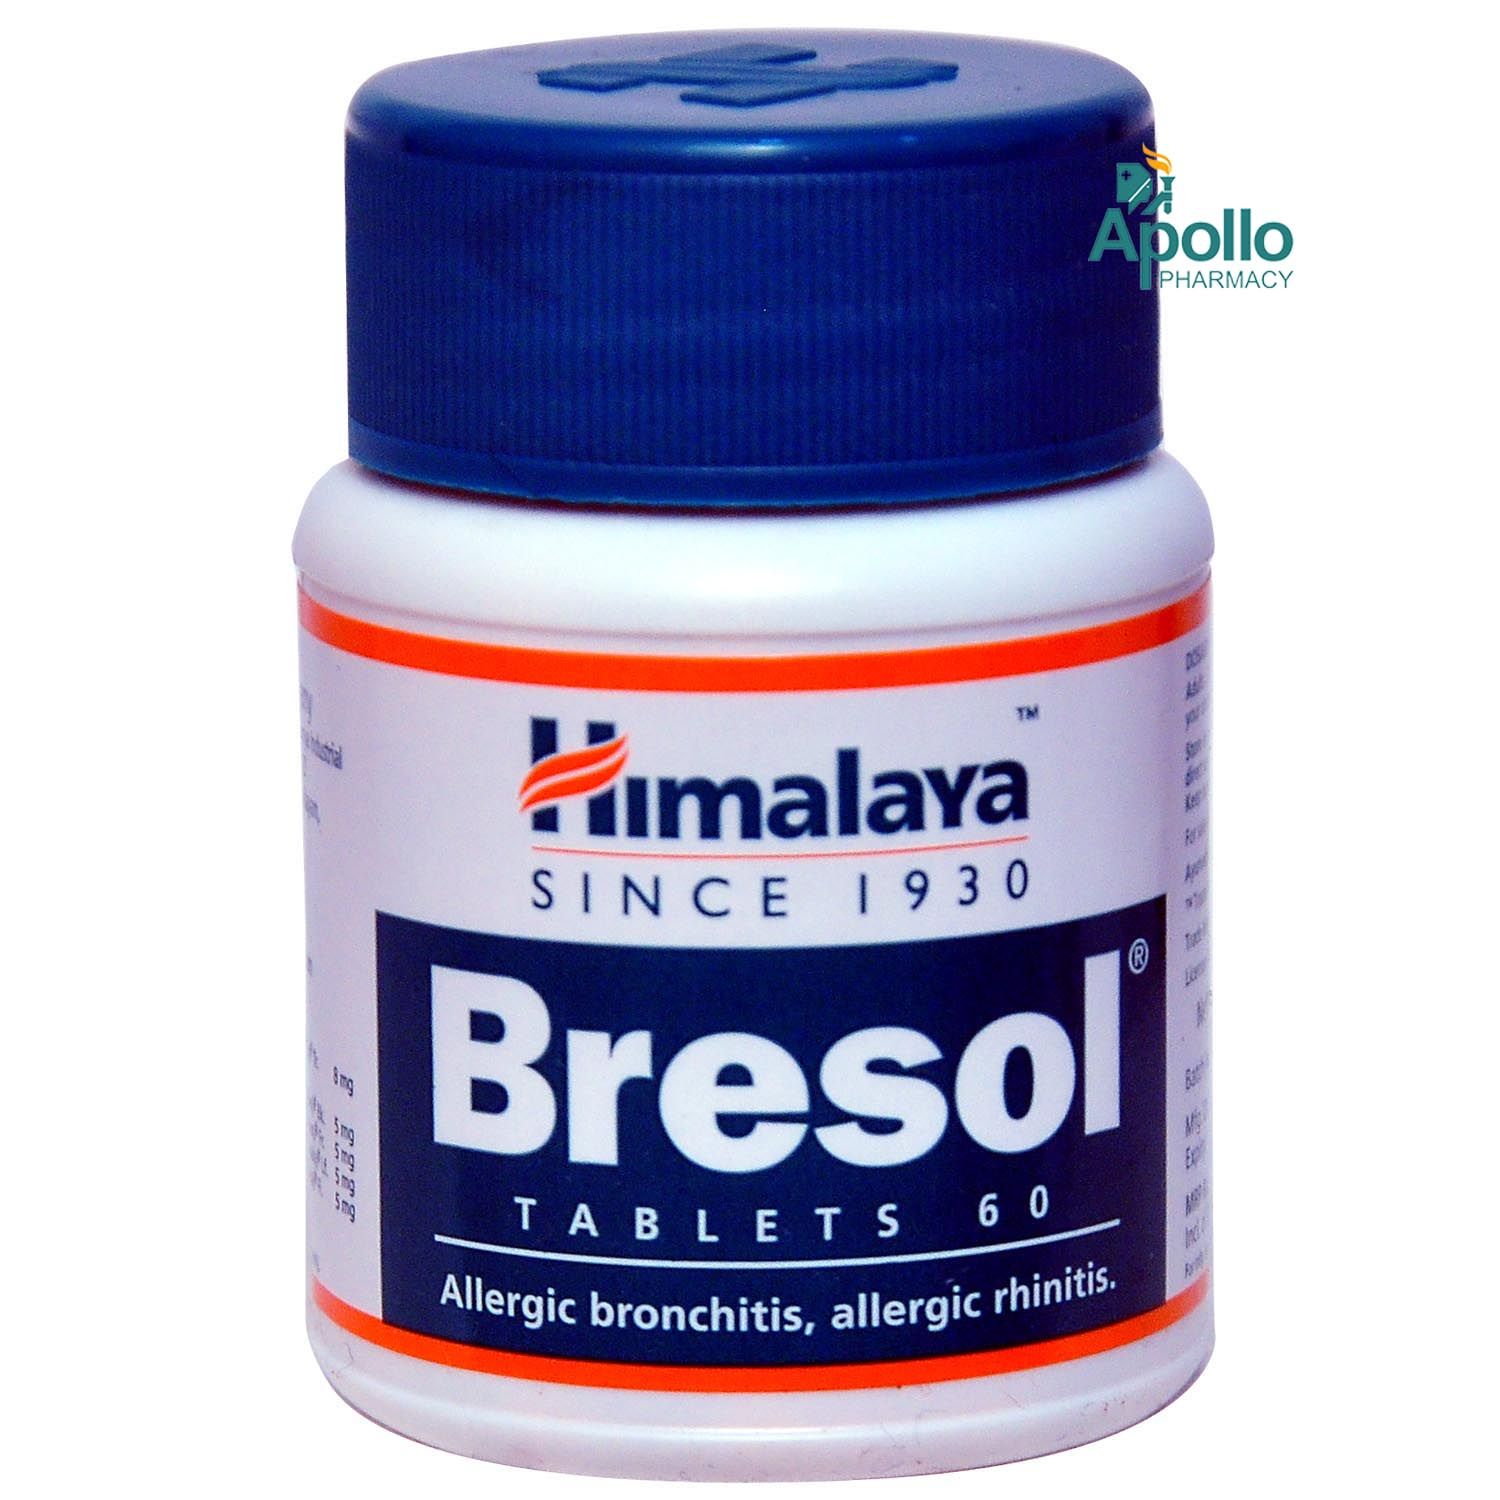 Himalaya Bresol, 60 Tablets, Pack of 1 